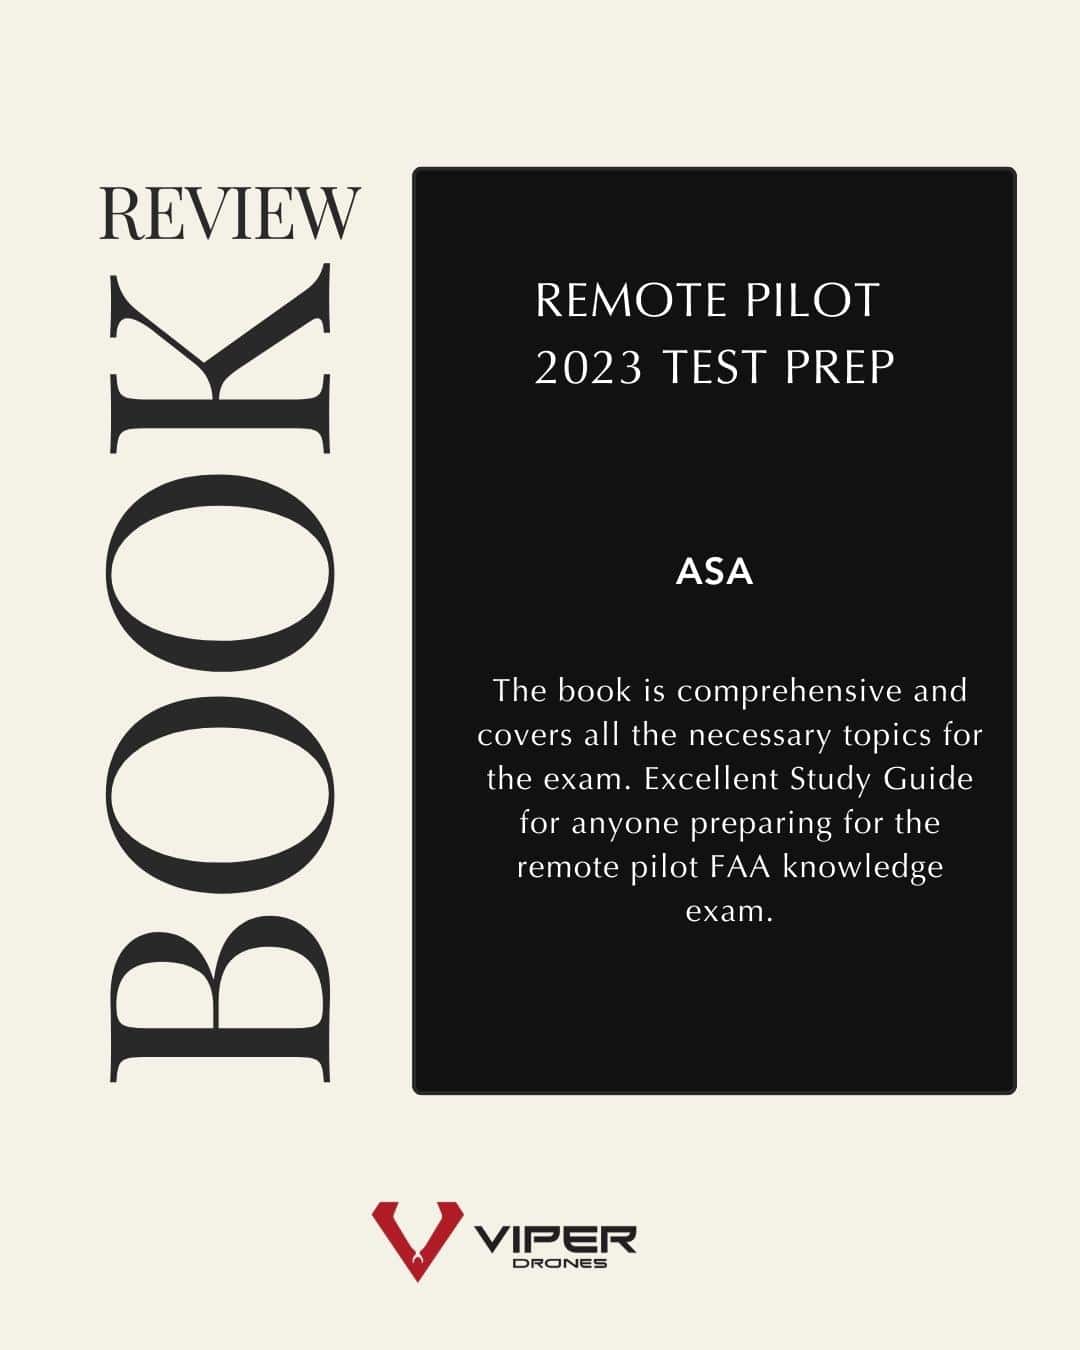 remote pilot 2023 test prep book review text